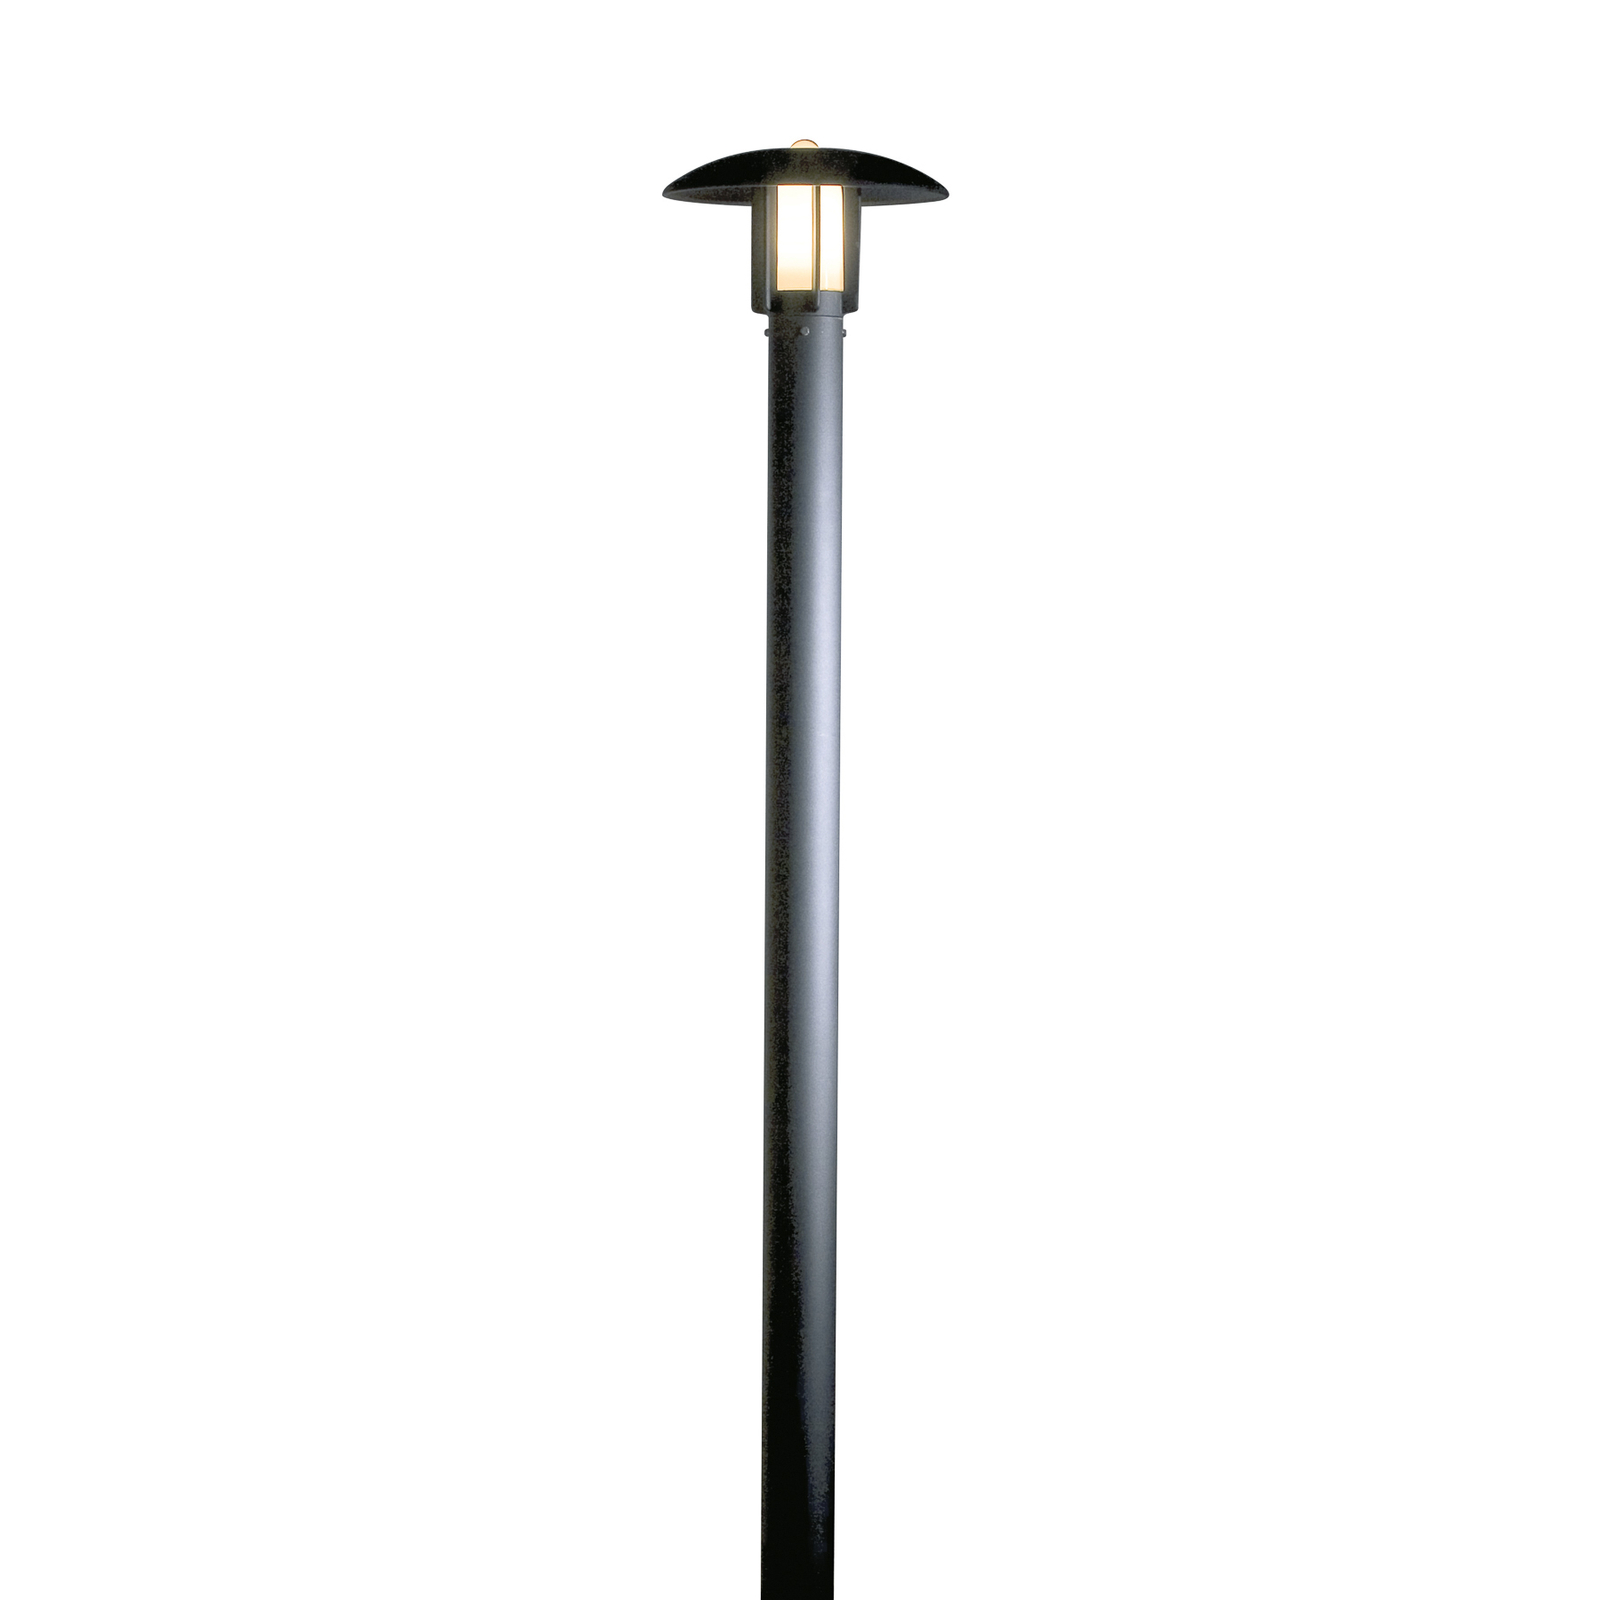 Heimdal lamp post, painted black